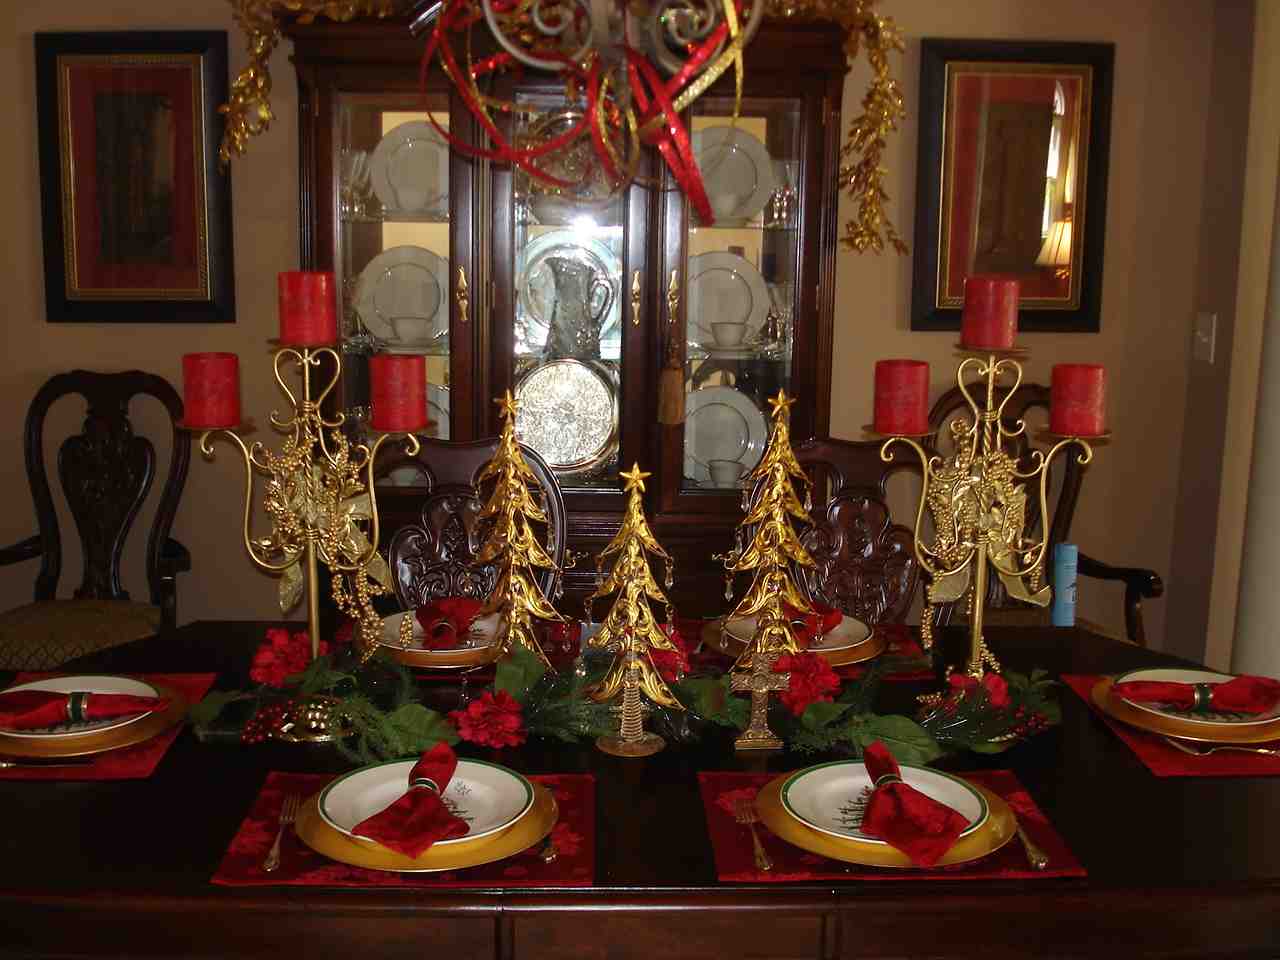 Dining Room Table Christmas Centerpiece Ideas